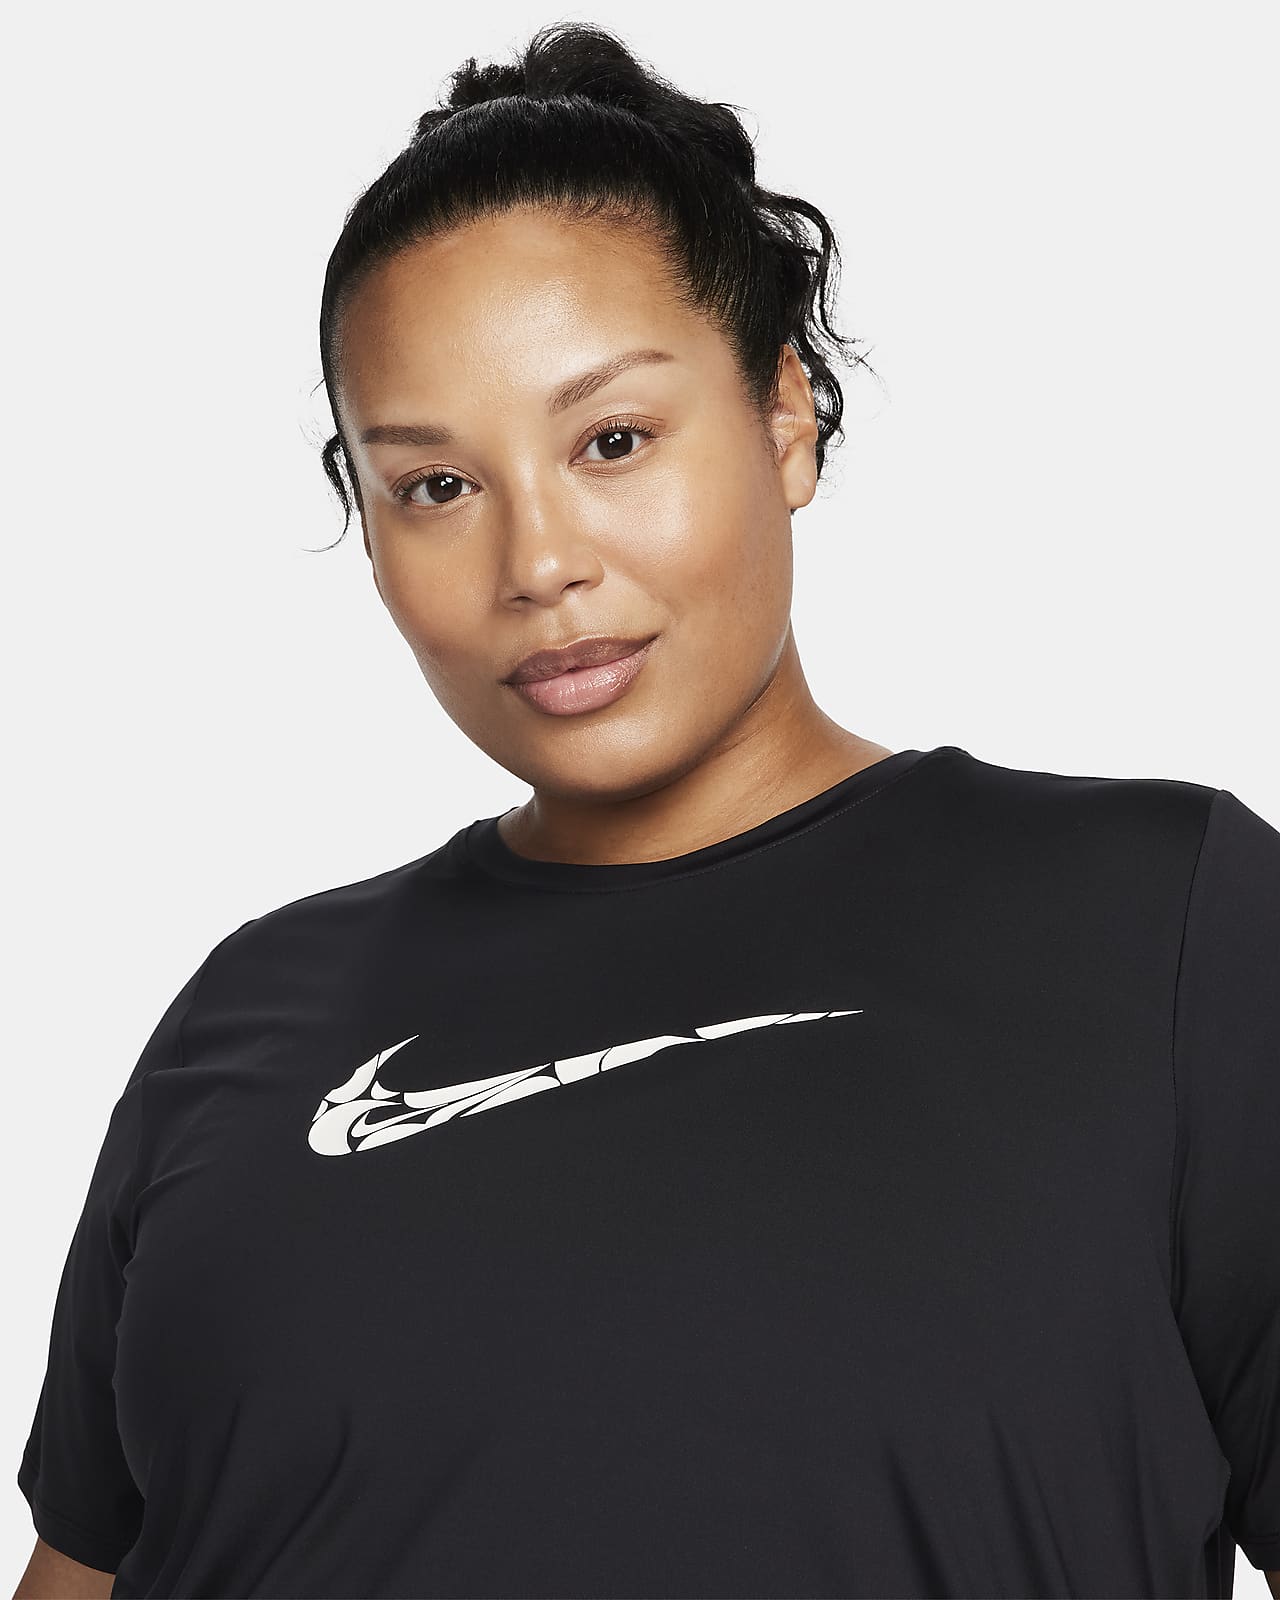 Nike One Classic Women's Dri-FIT Short-Sleeve Top. Nike ID